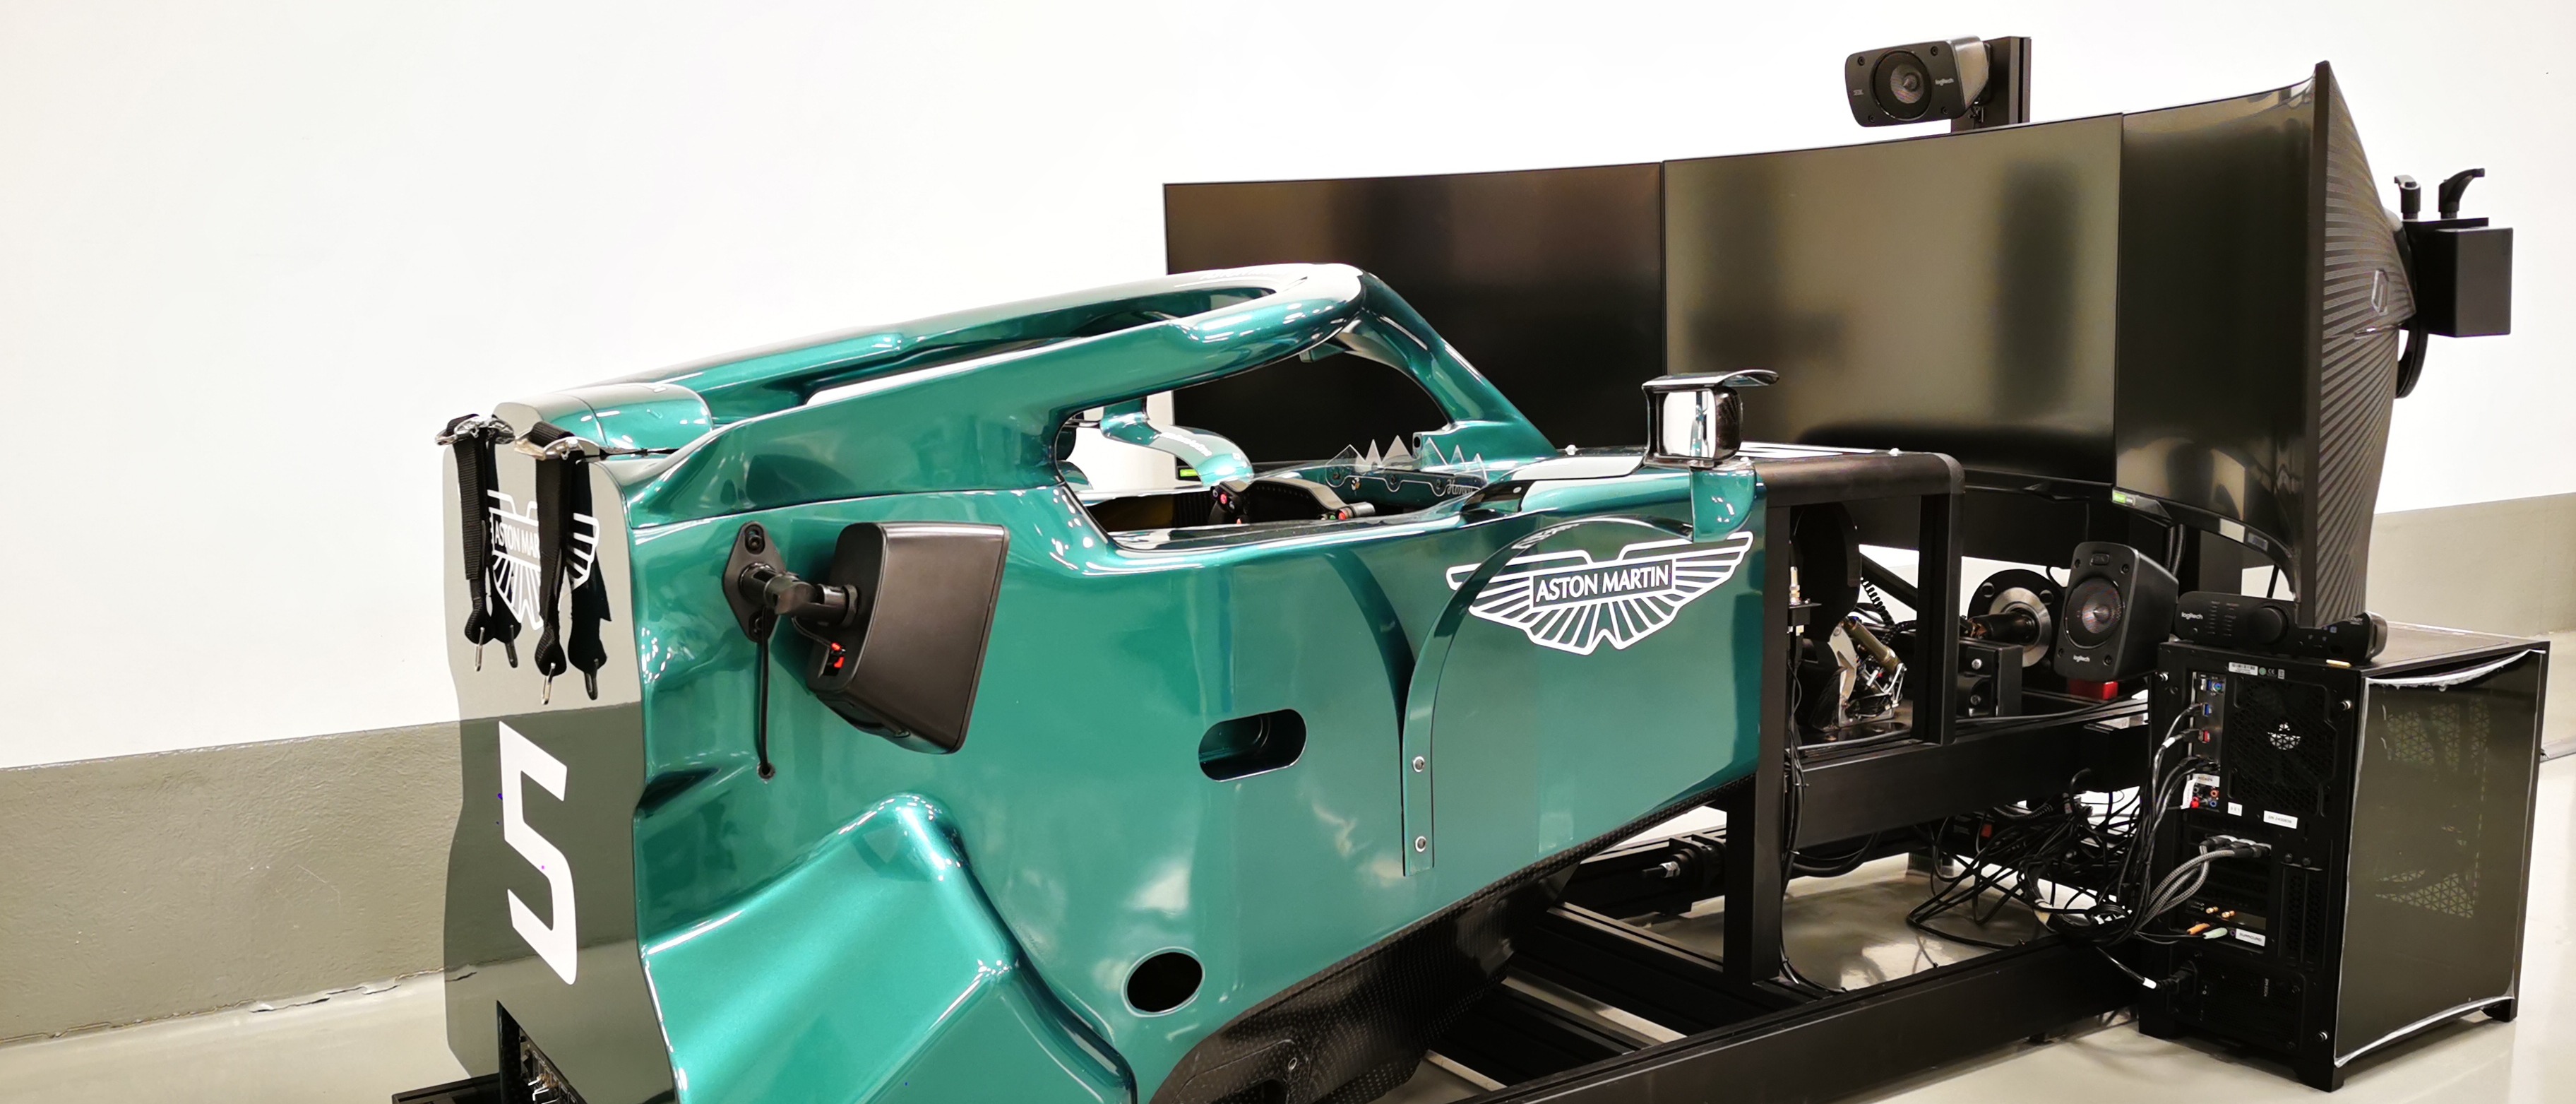 The Aston Martin F1 simulator that's been delivered to F1 driver Sebastian Vettel